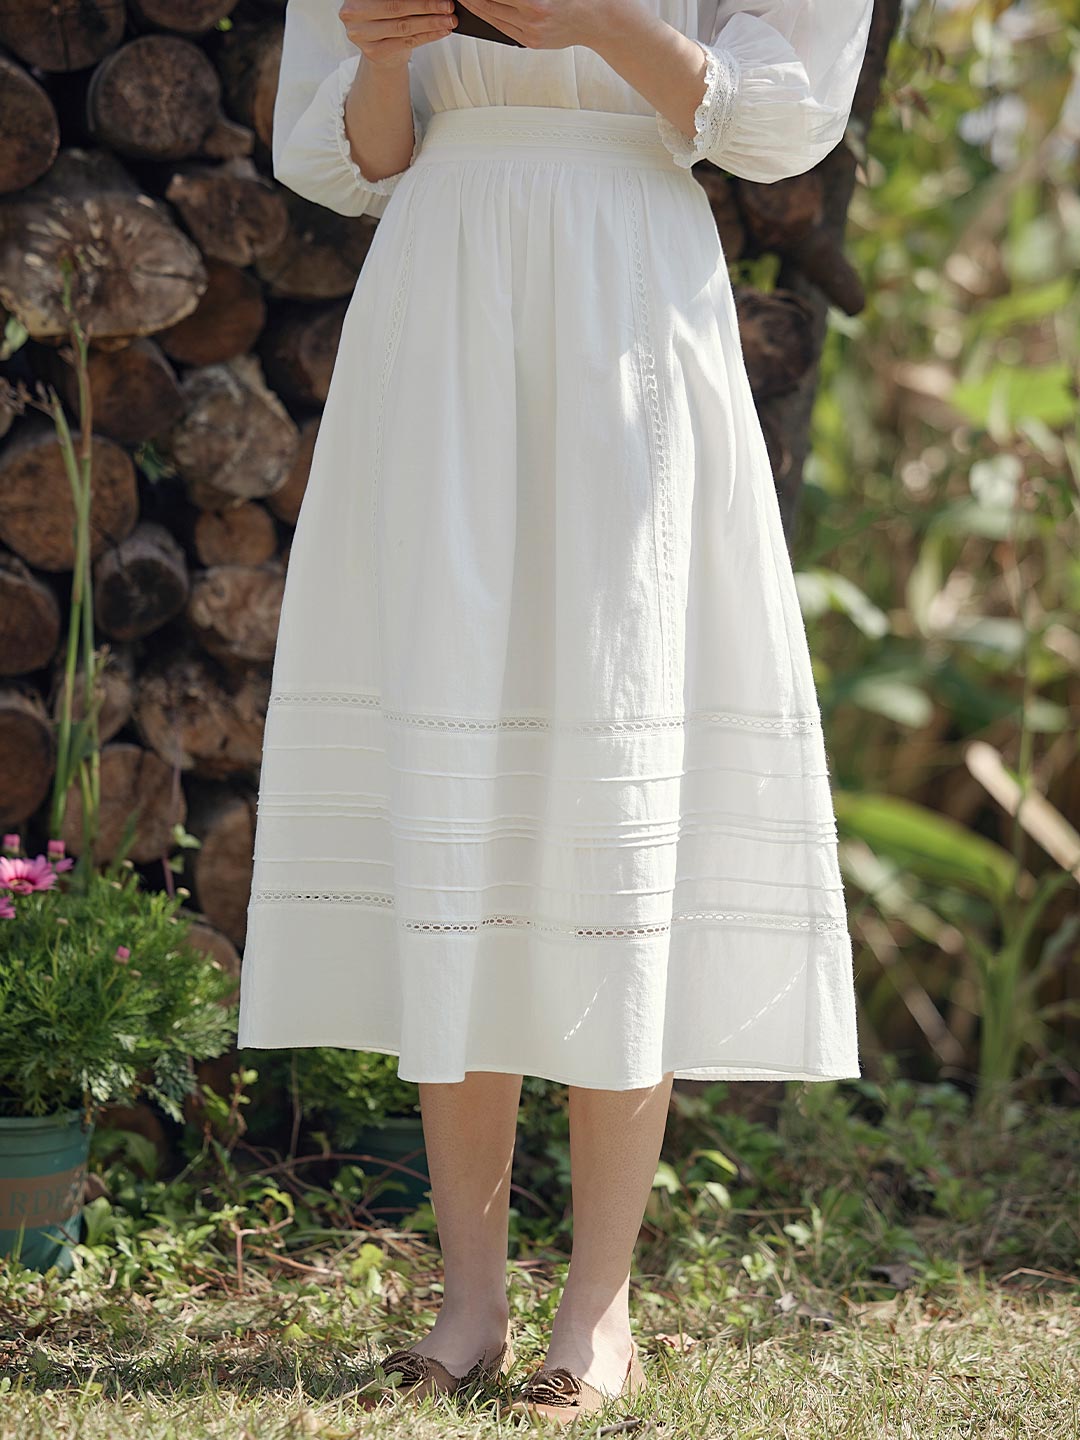 Renata Victorian Lace Panel White Skirt